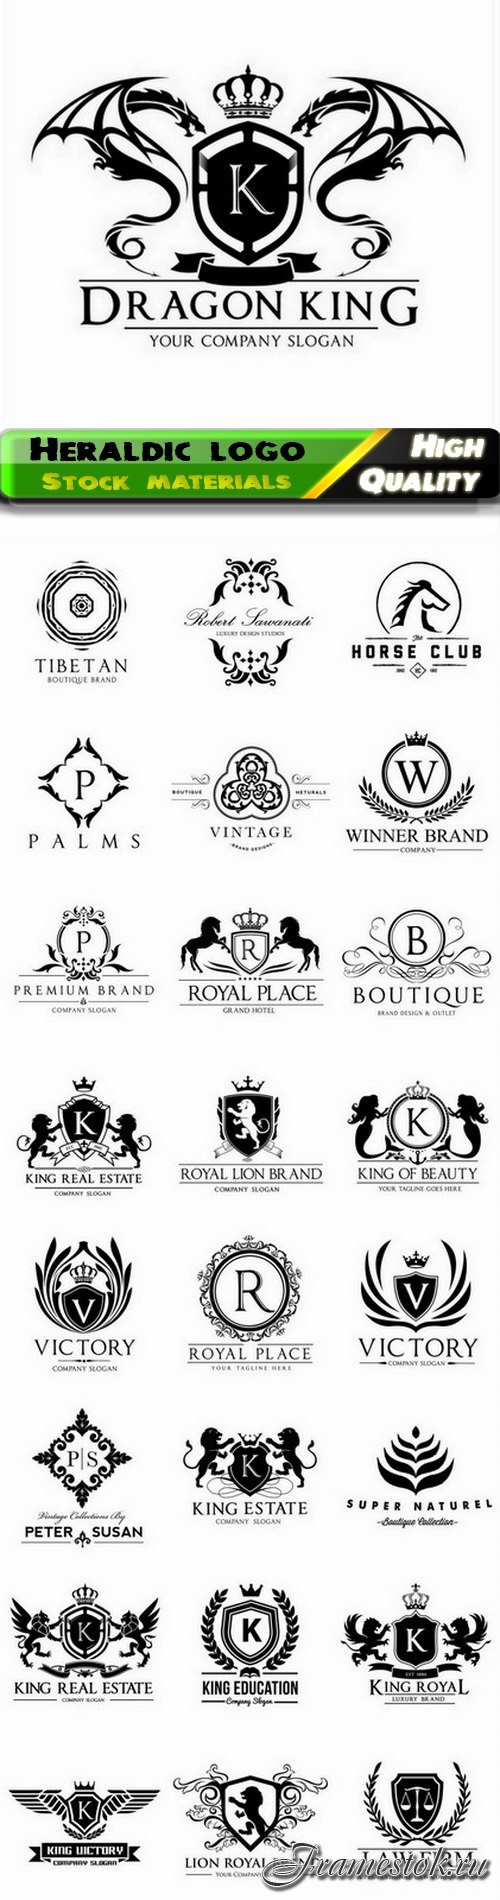 Company logo and emblem with heraldic decorative elements - 25 Eps